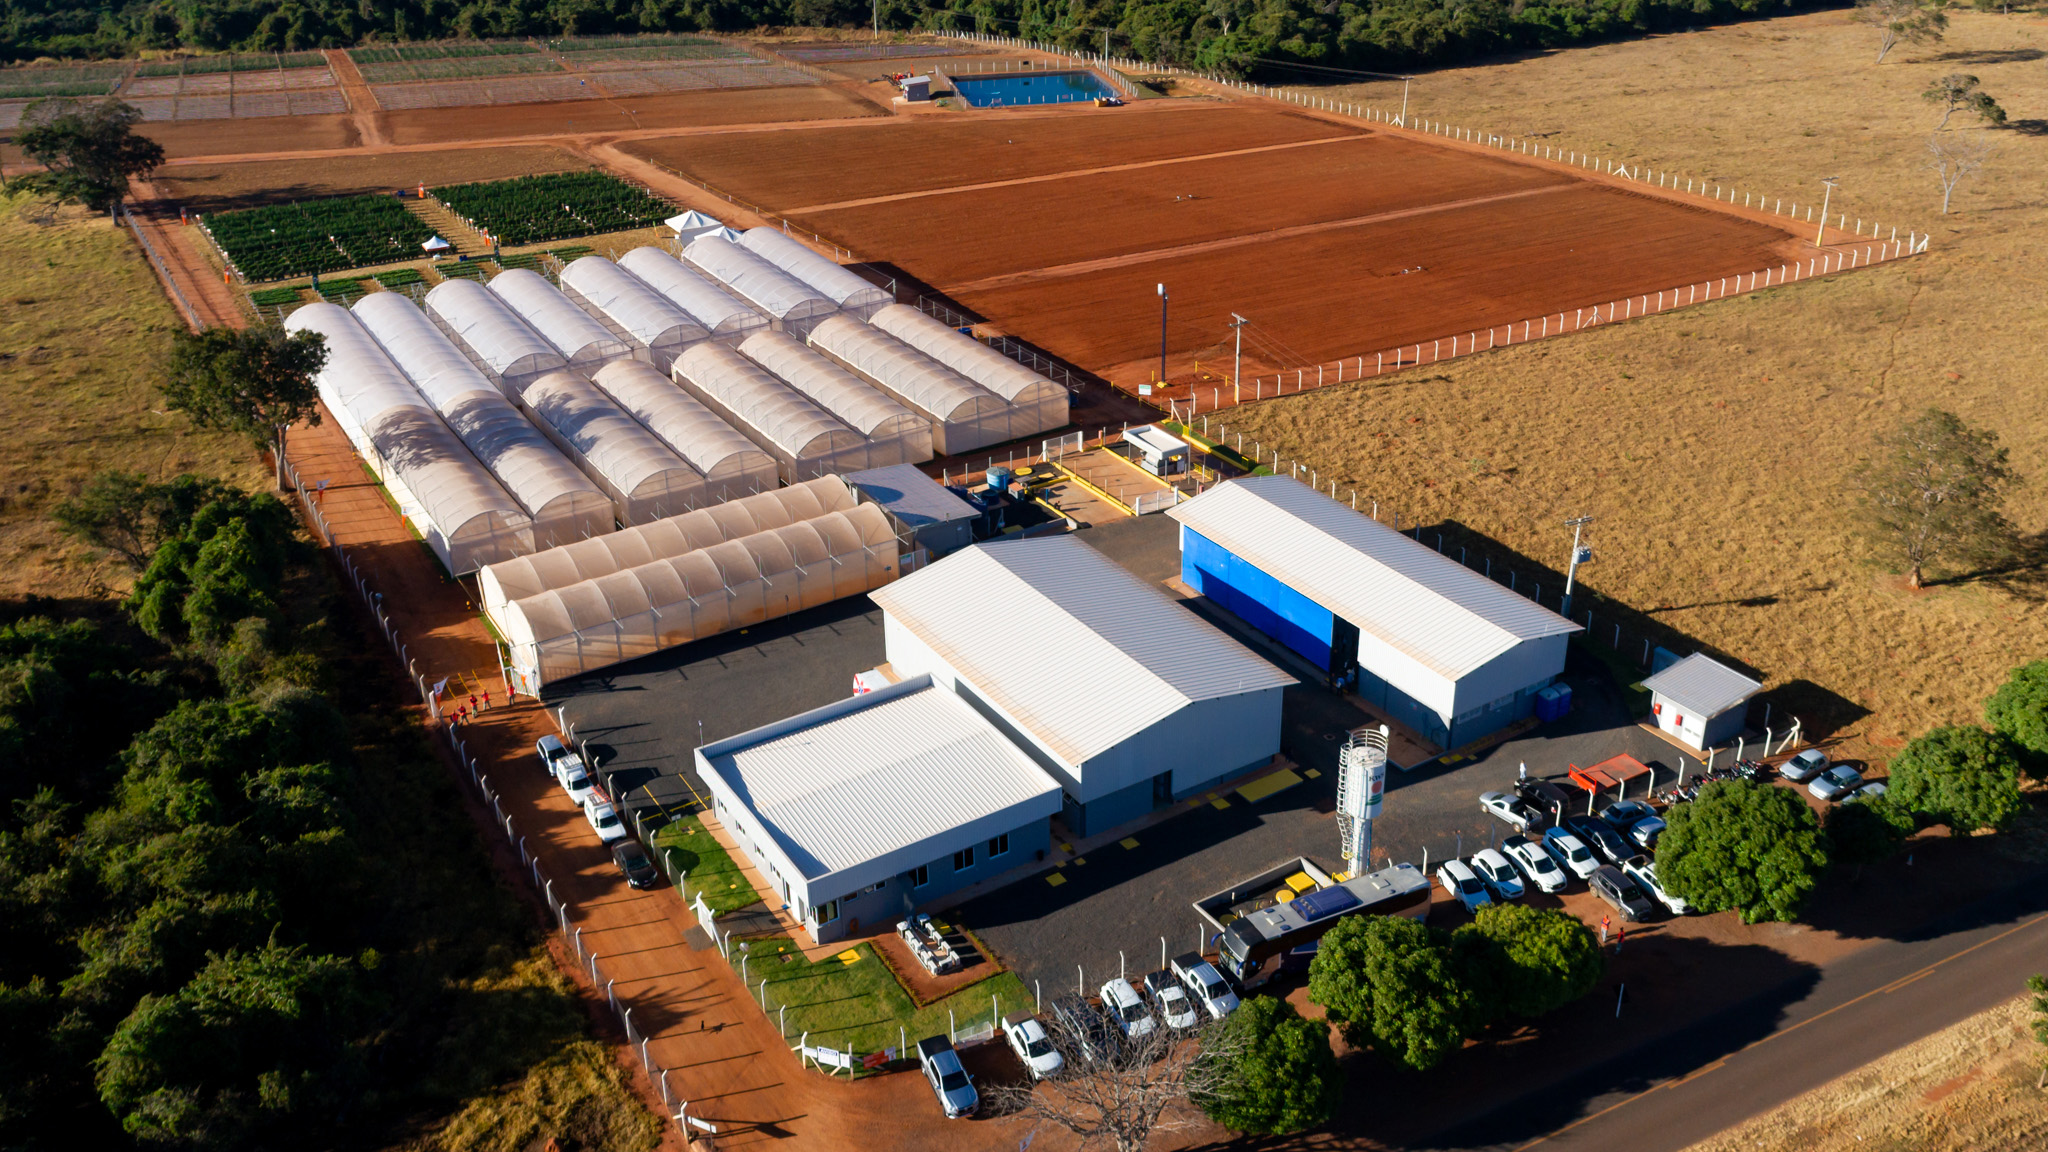 The new R&D facility in Uberlândia, Brazil